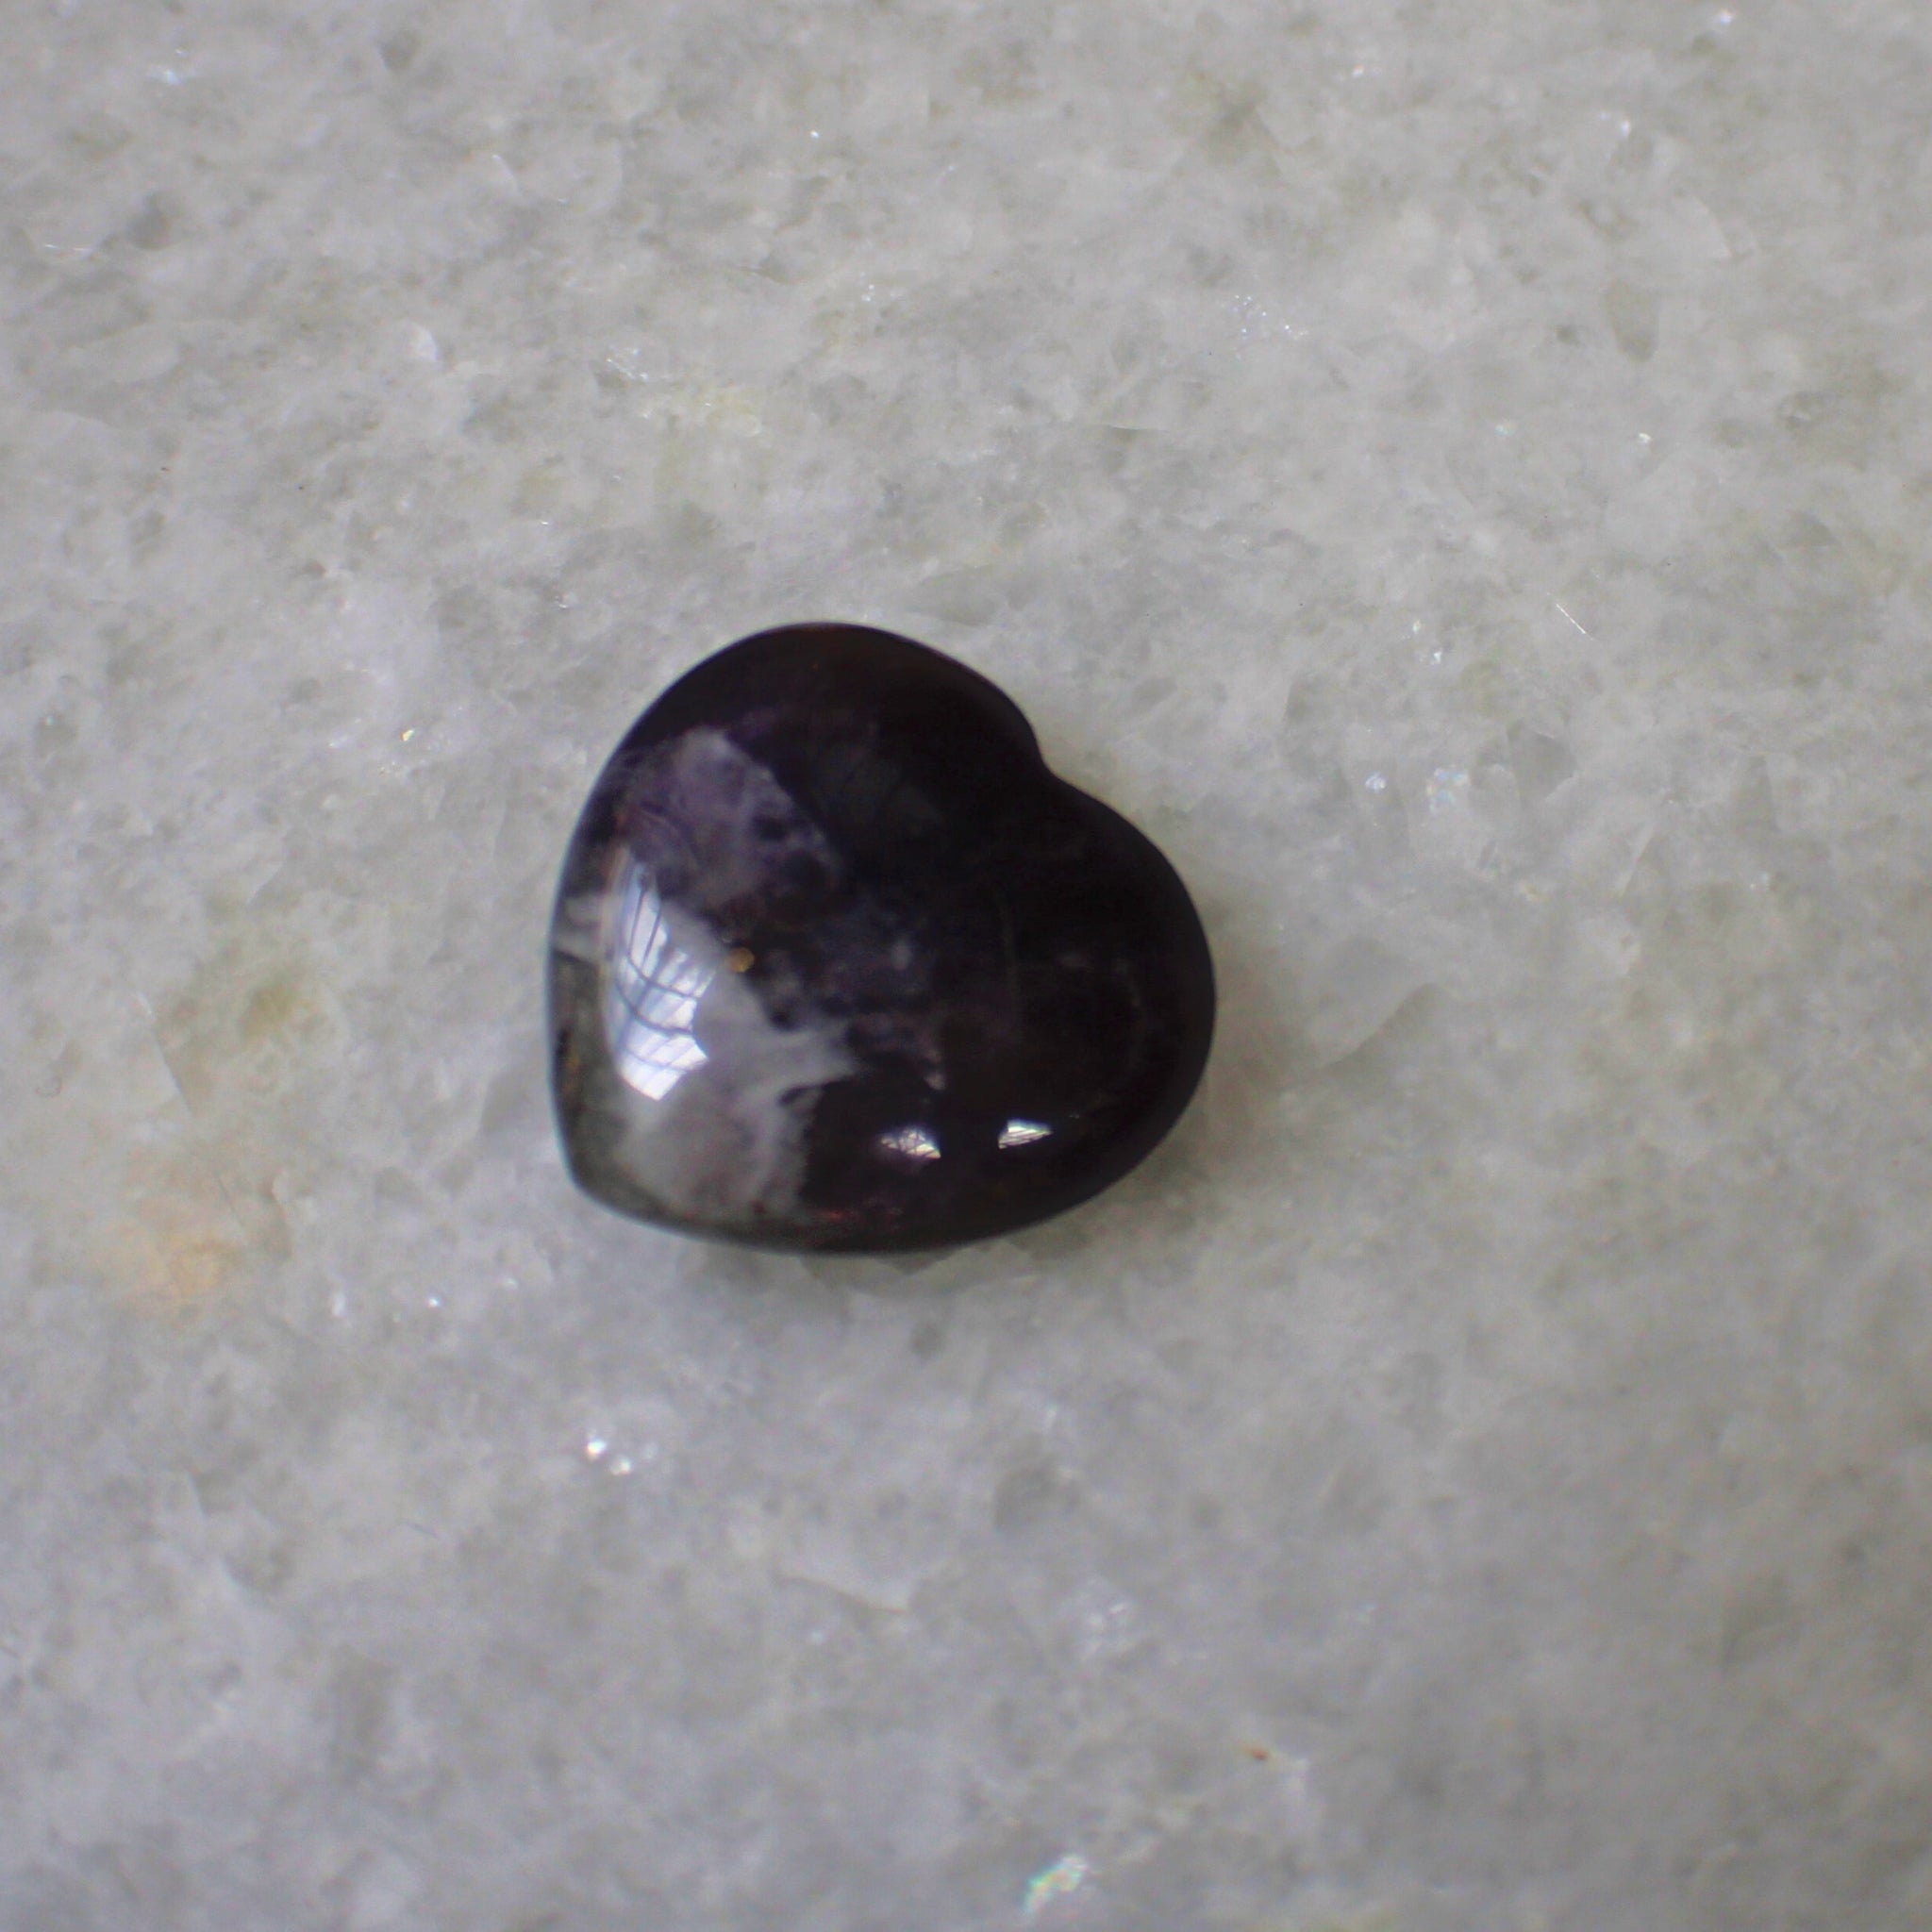 Amethyst Crystal Heart